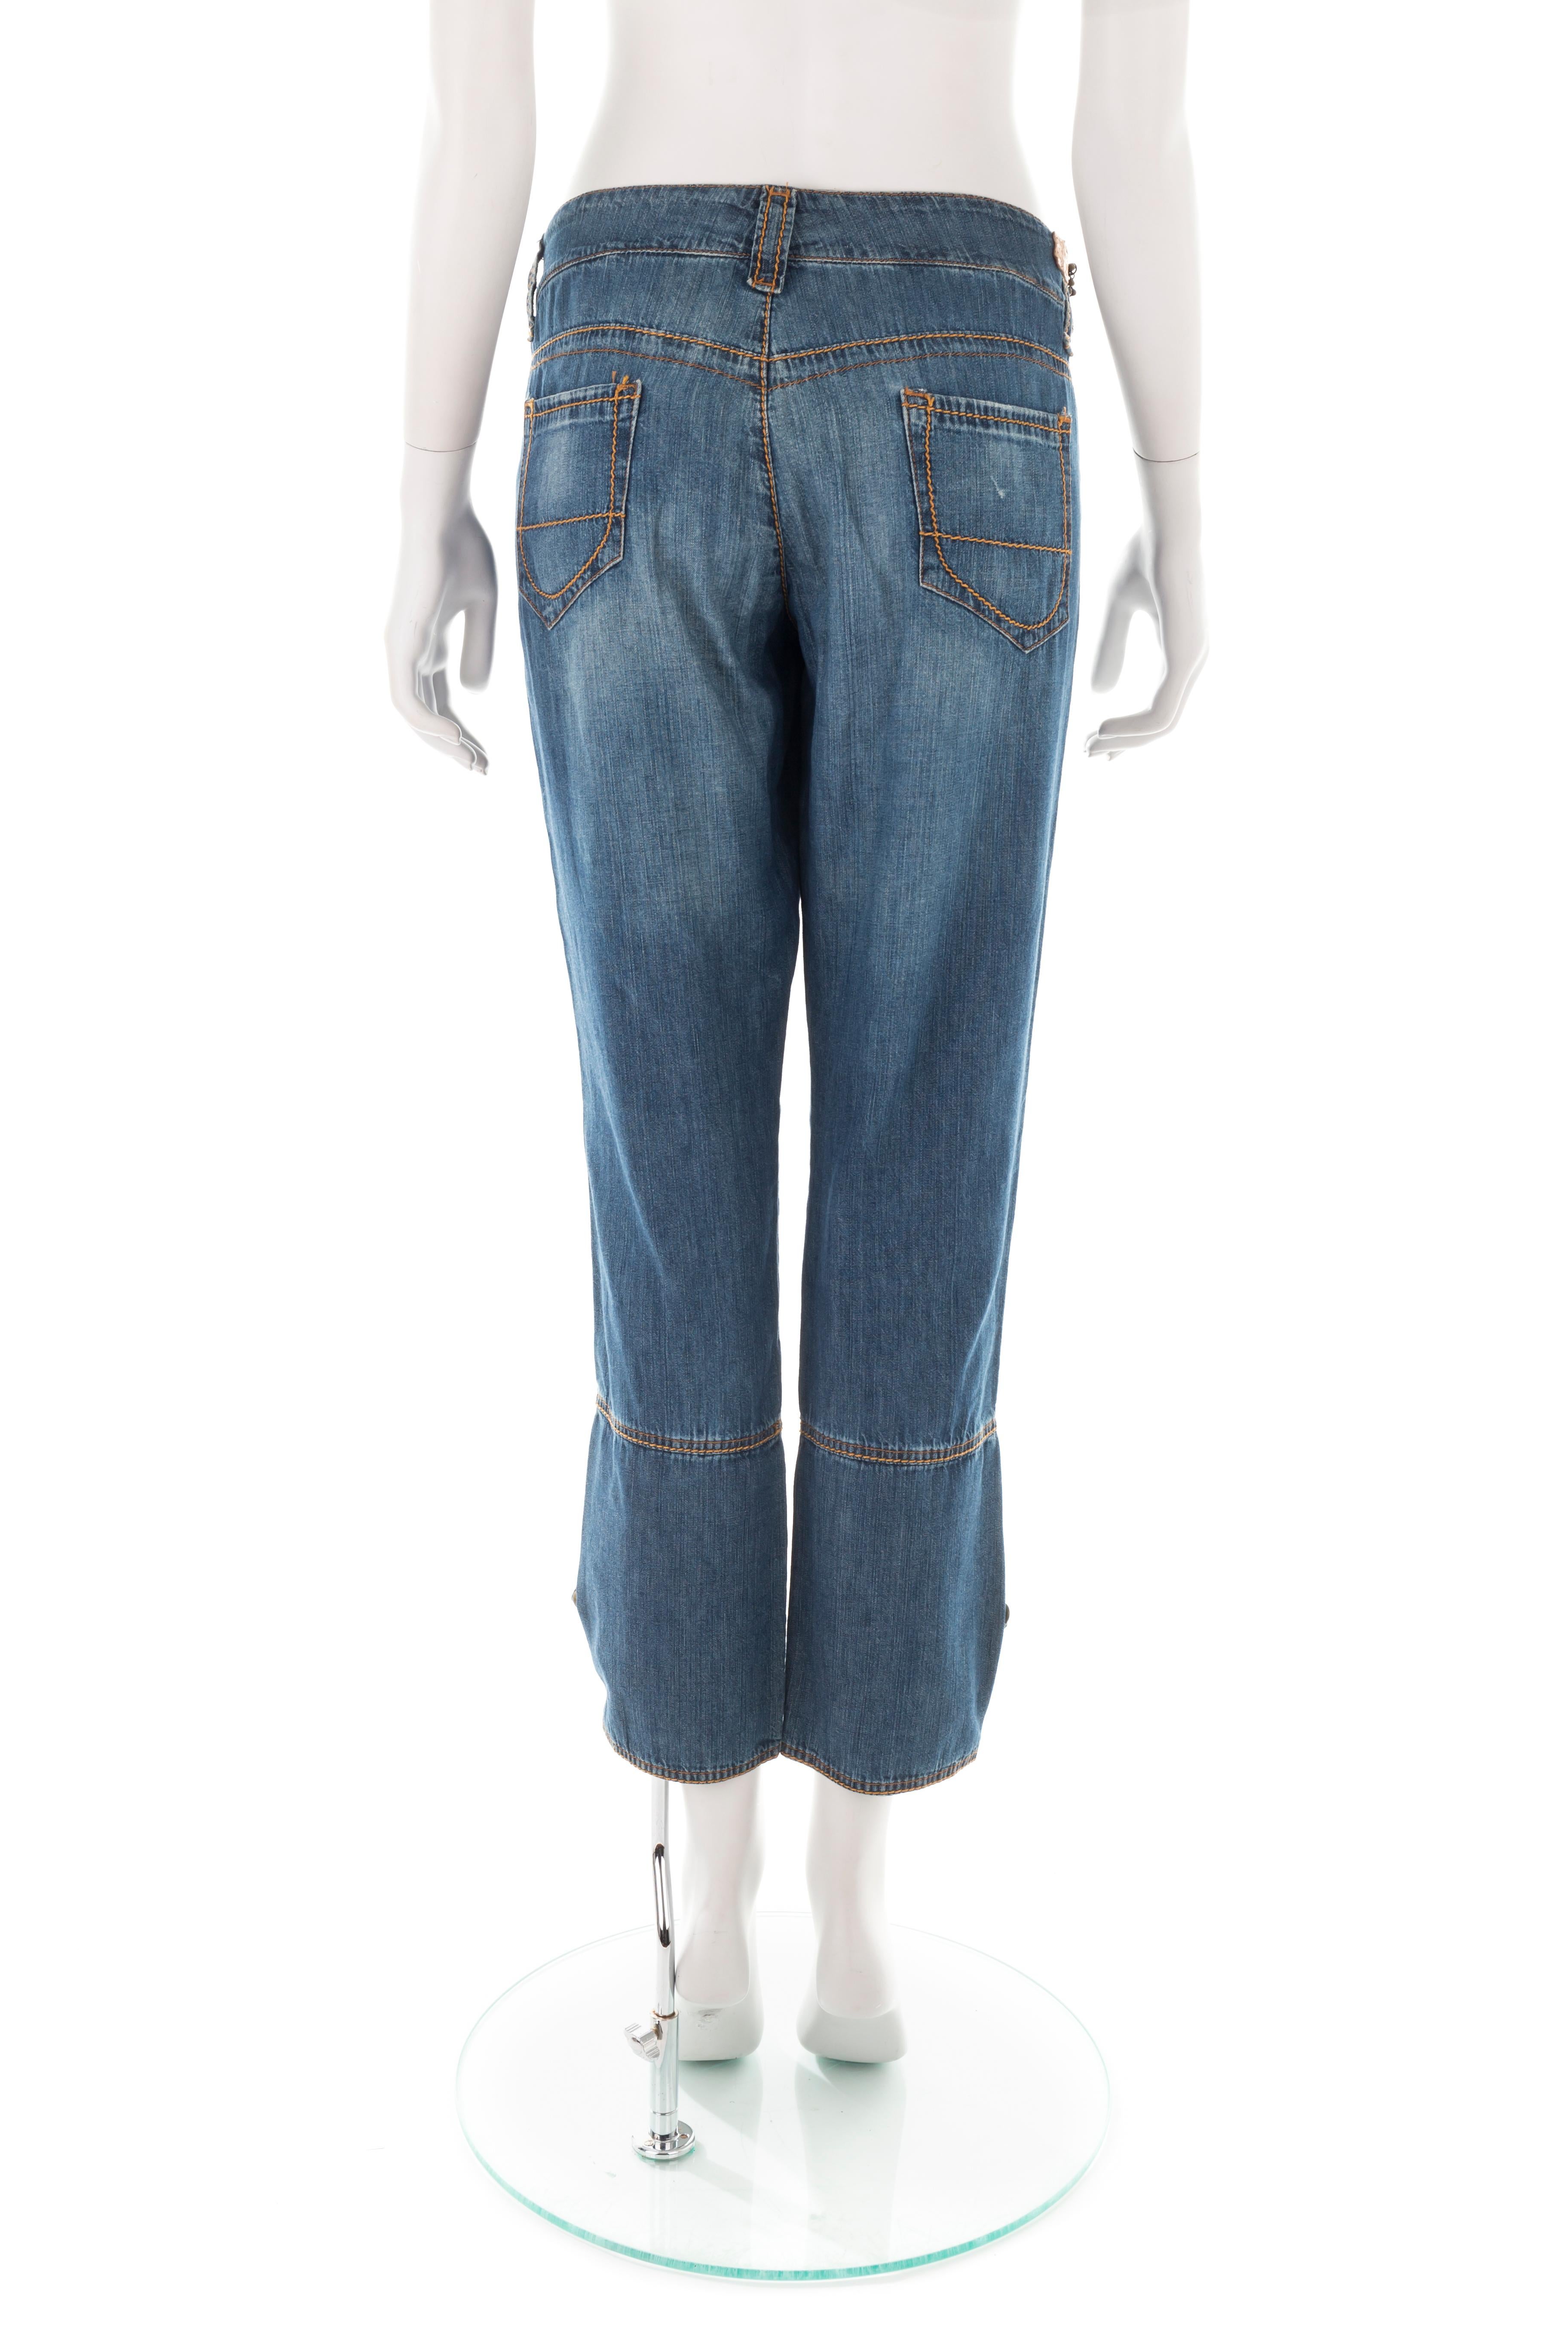 Ermanno Scervino S/S 2005 Audrey Hepburn capri jeans In Good Condition For Sale In Rome, IT